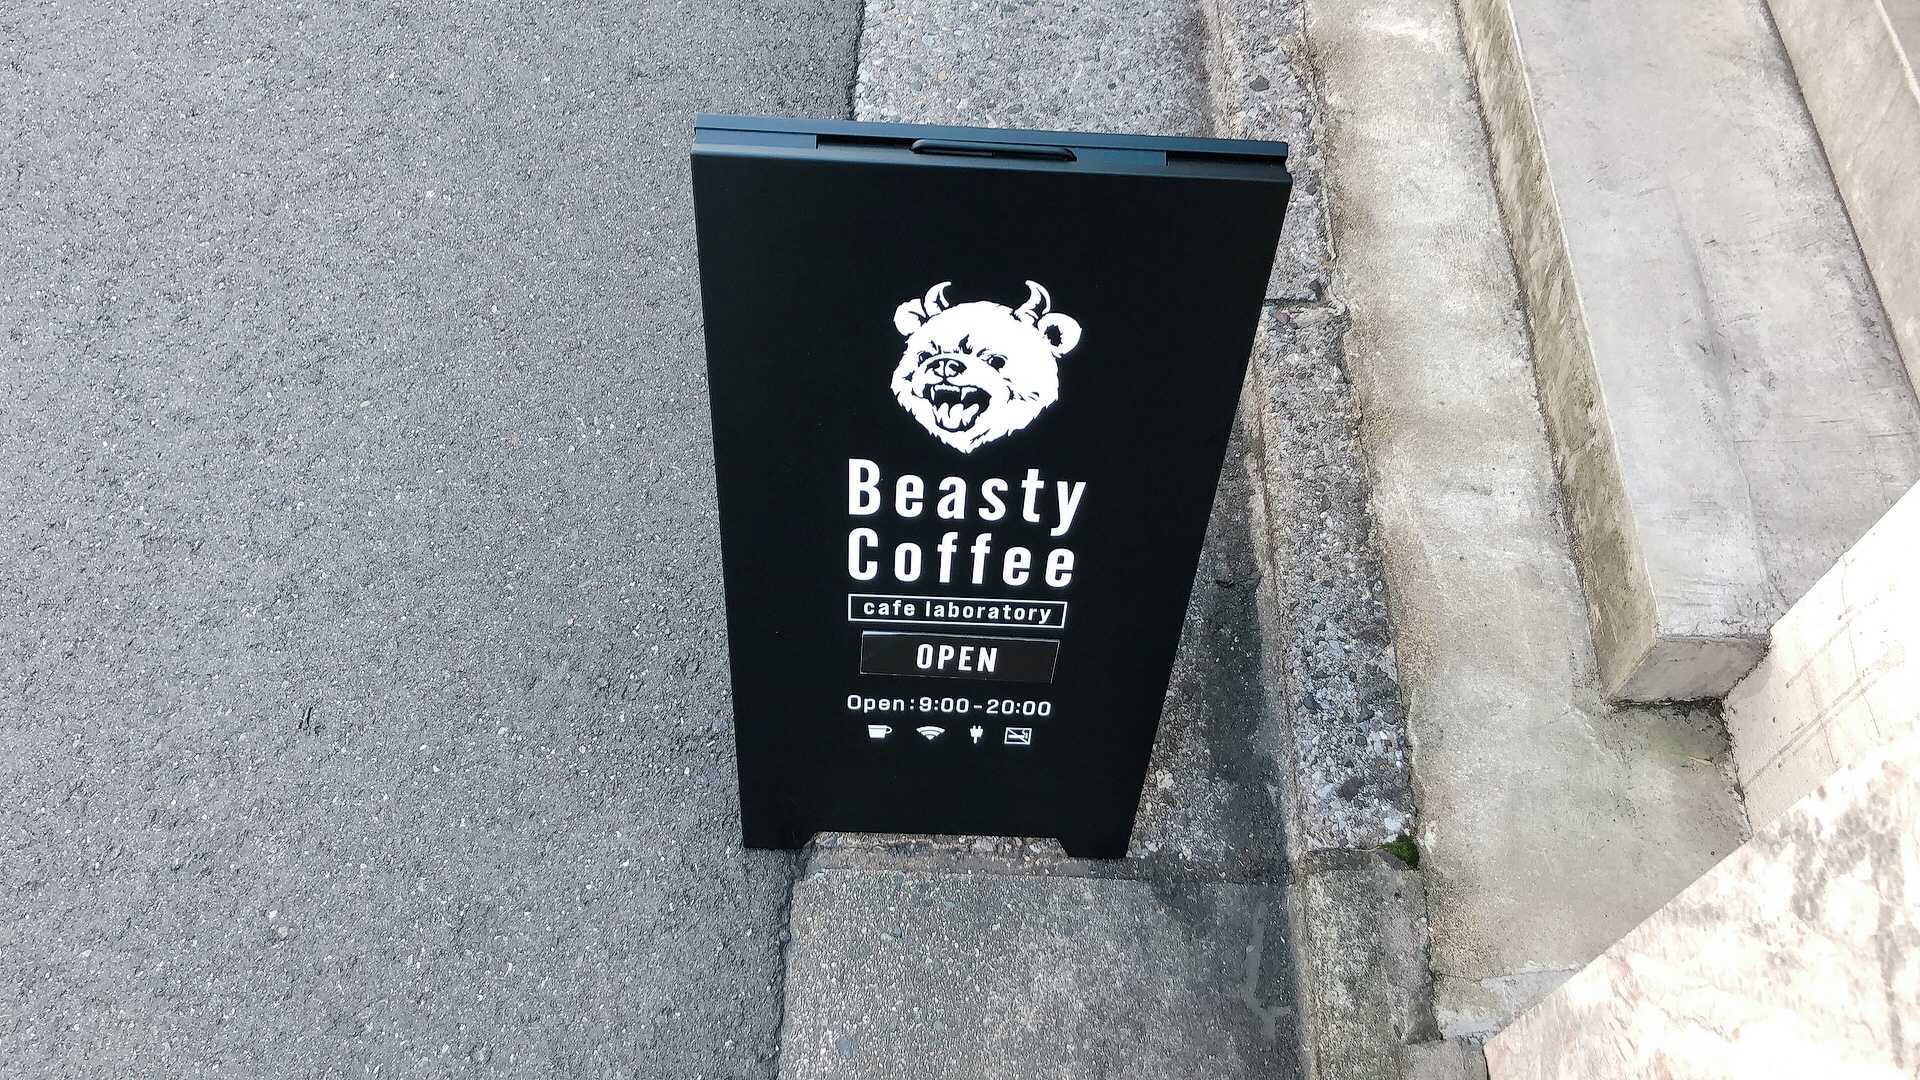 Beasty Coffee cafe laboratoryの内観・外観